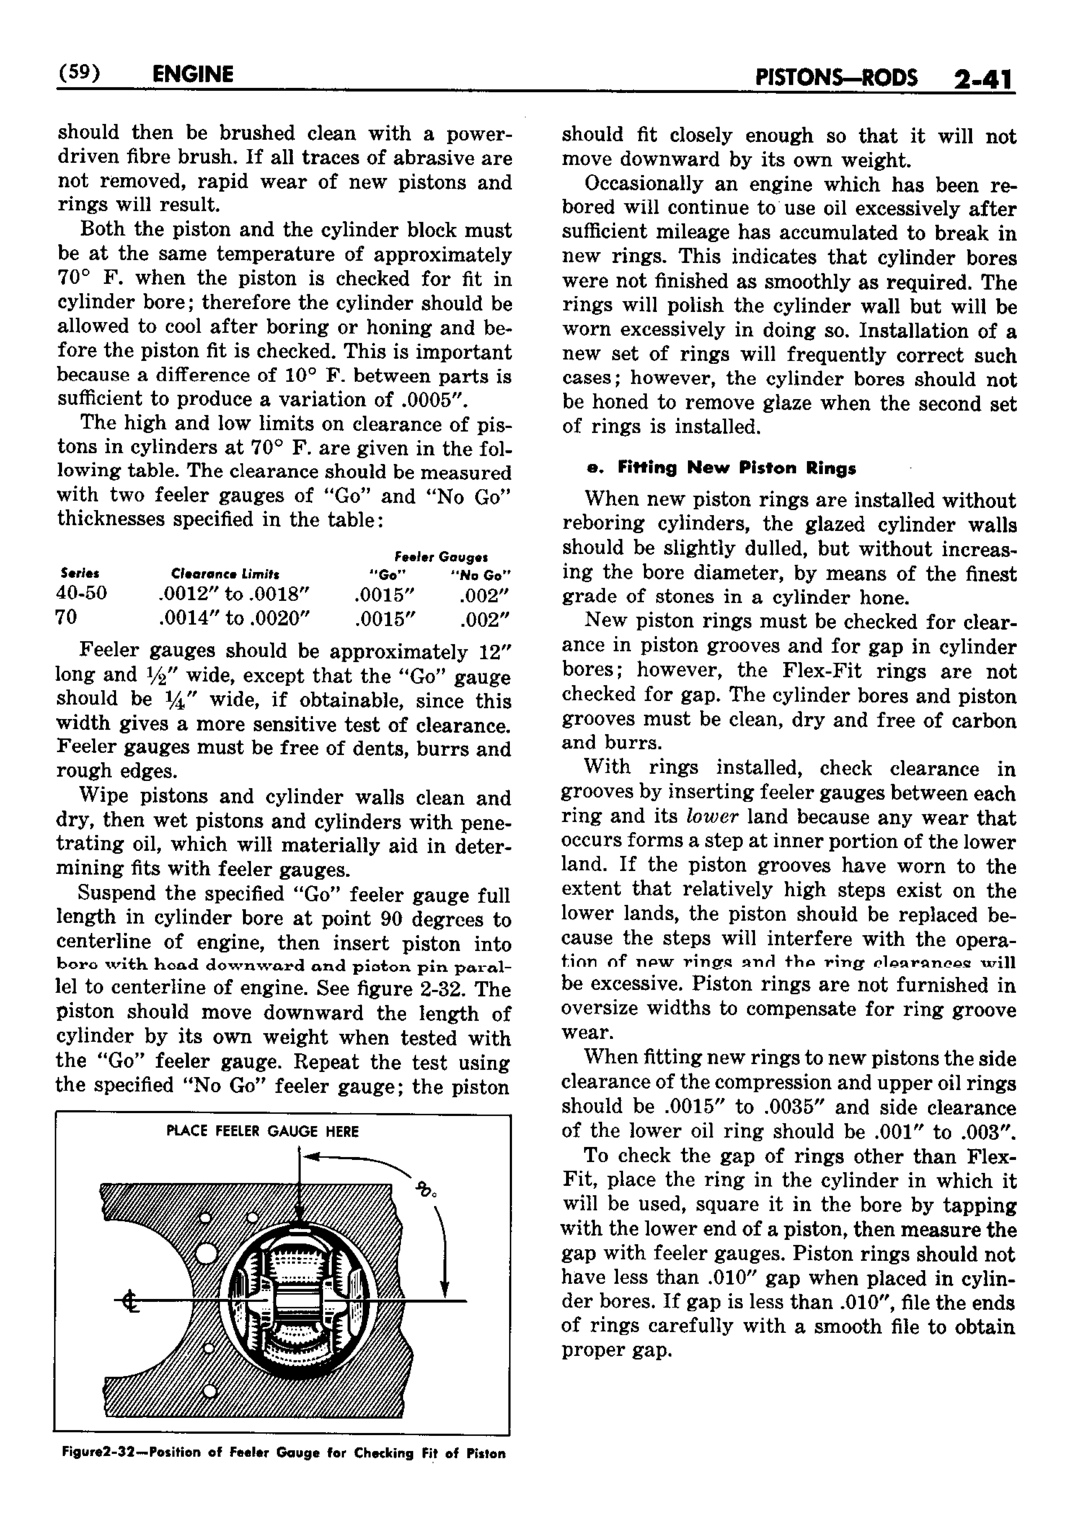 n_03 1952 Buick Shop Manual - Engine-041-041.jpg